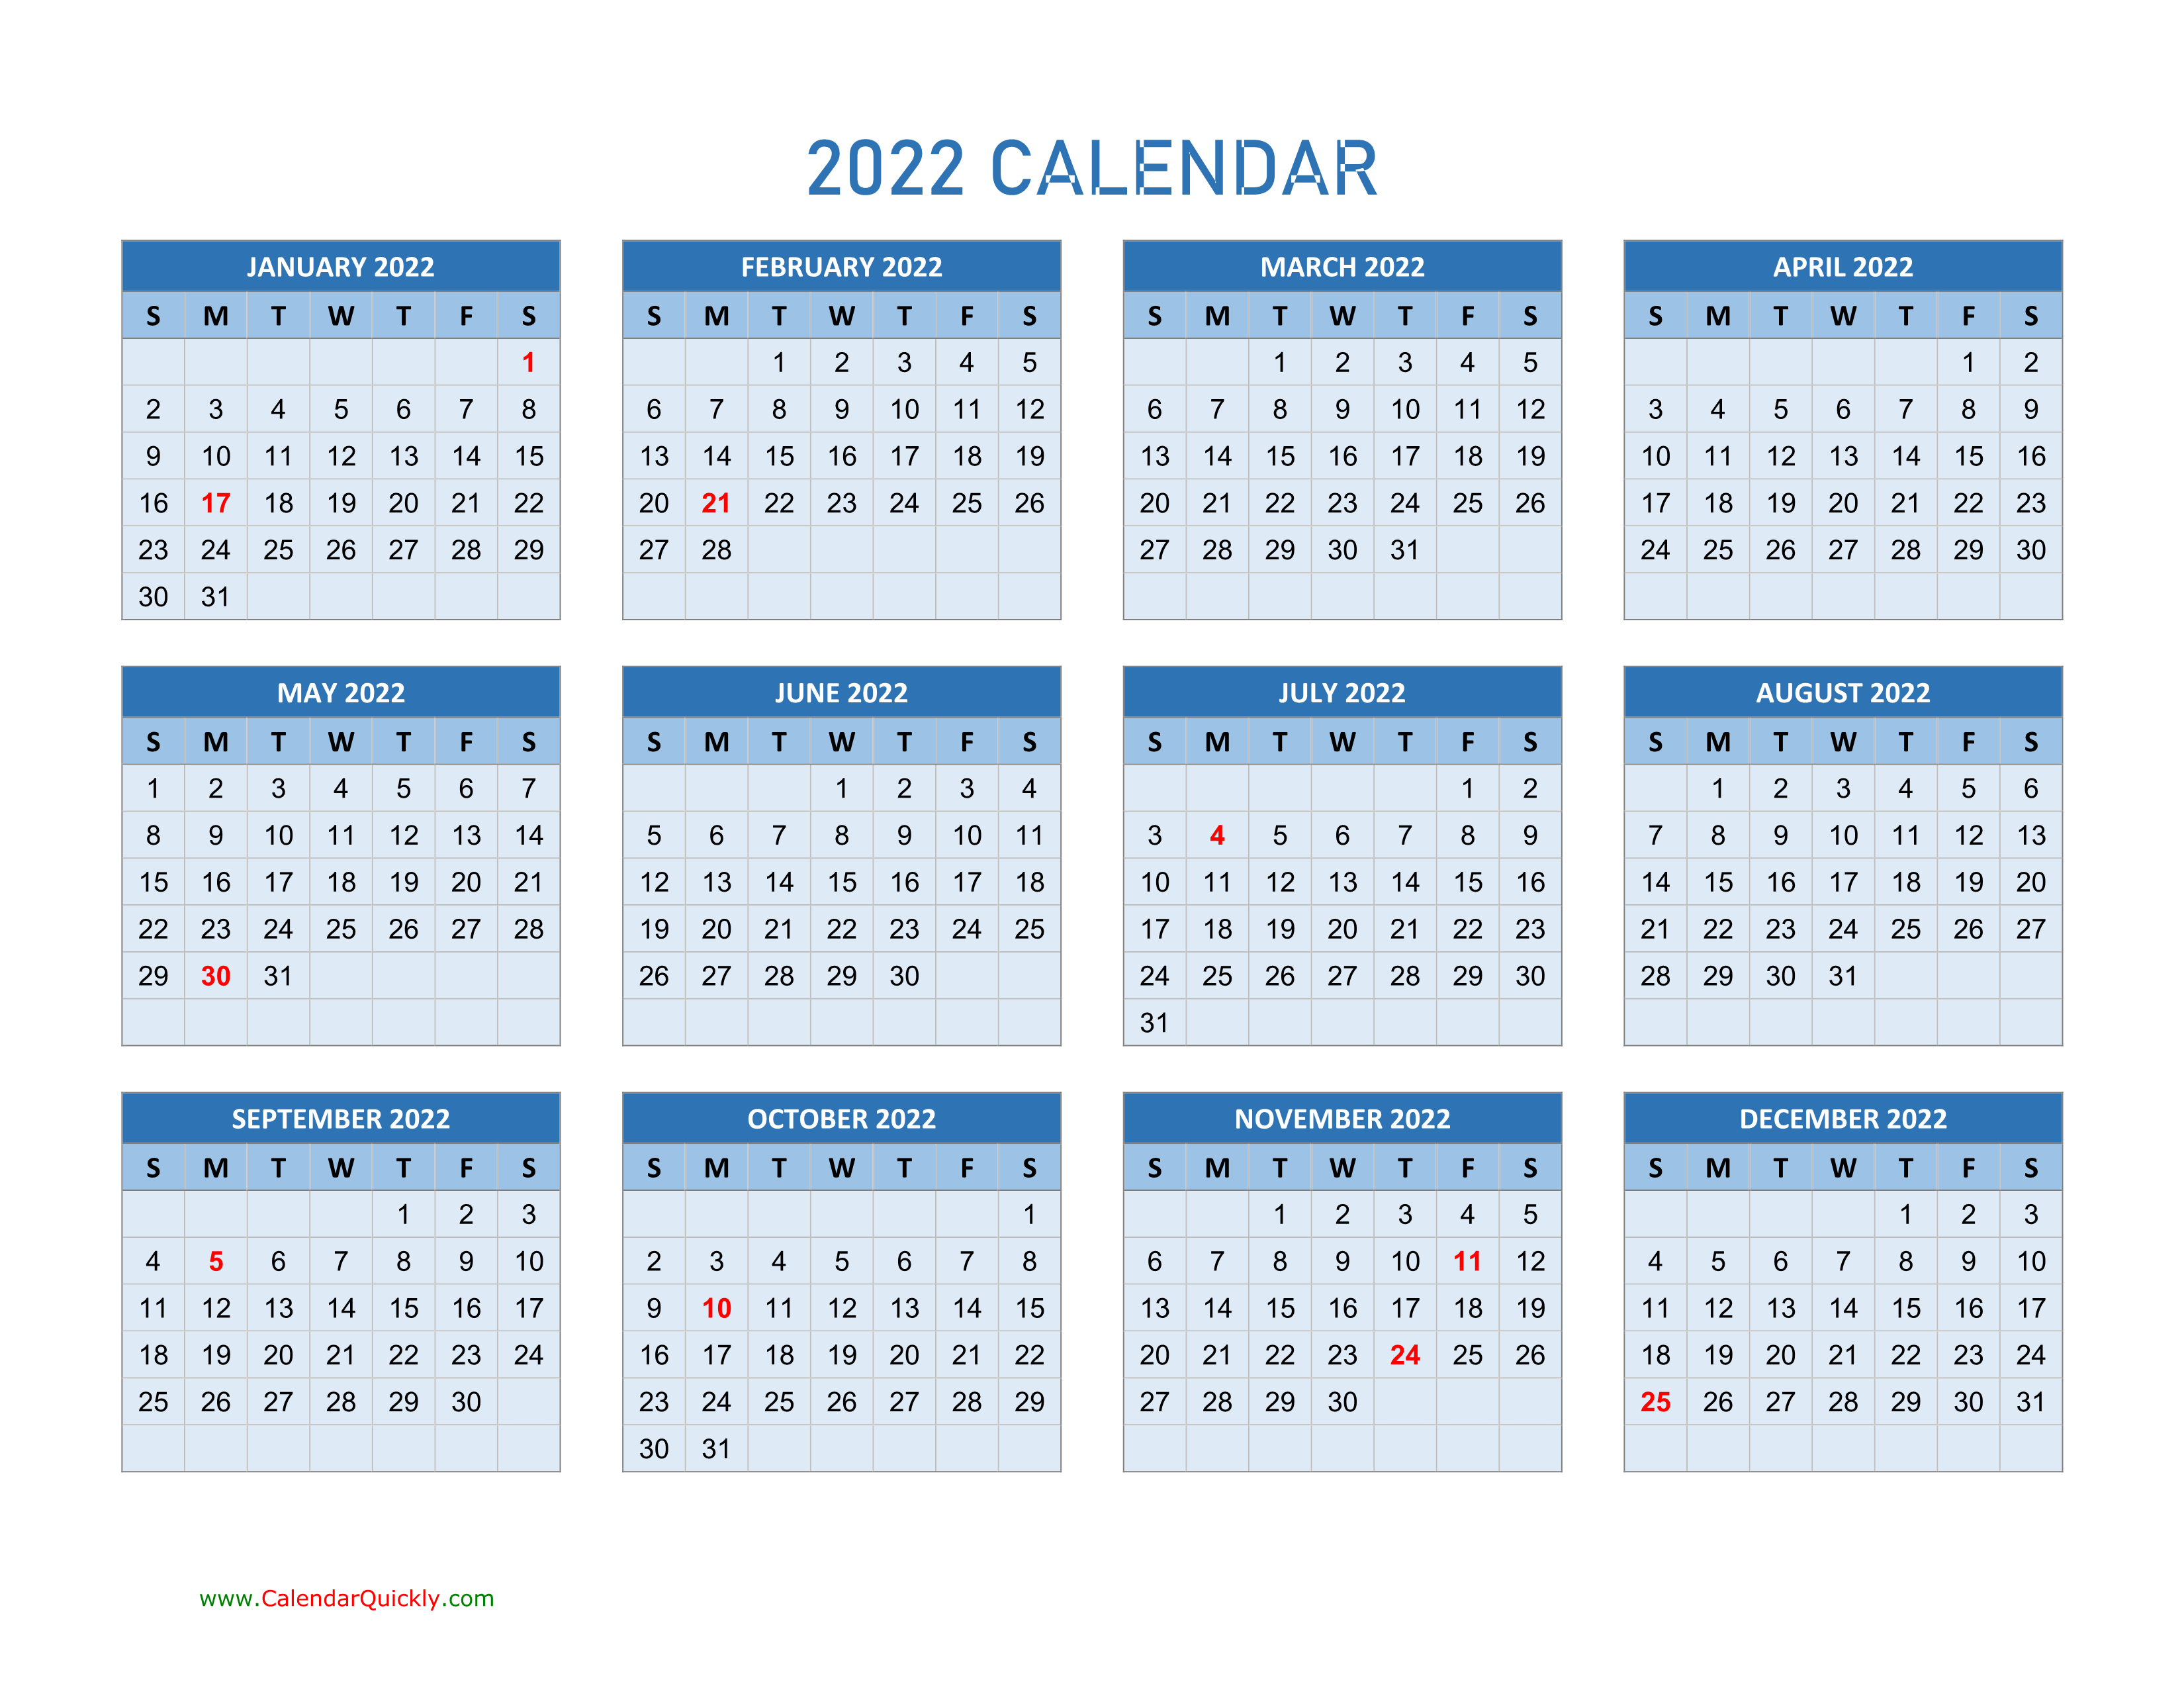 download 2022 dates